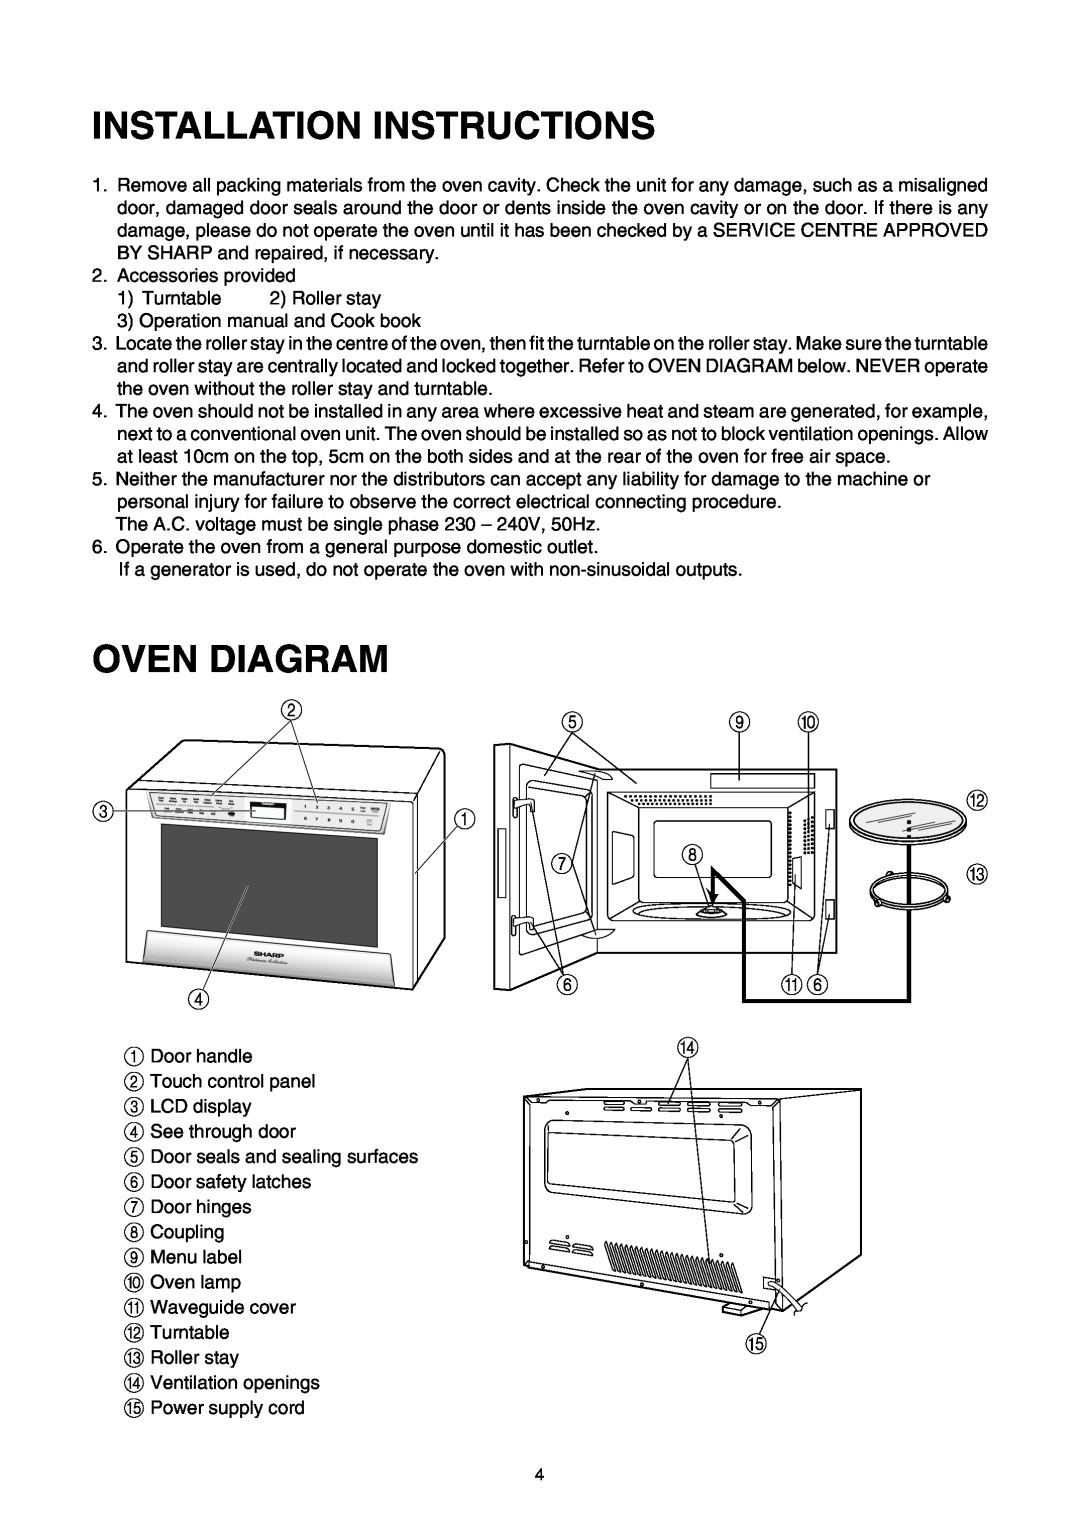 Sharp R-520E manual Installation Instructions, Oven Diagram 